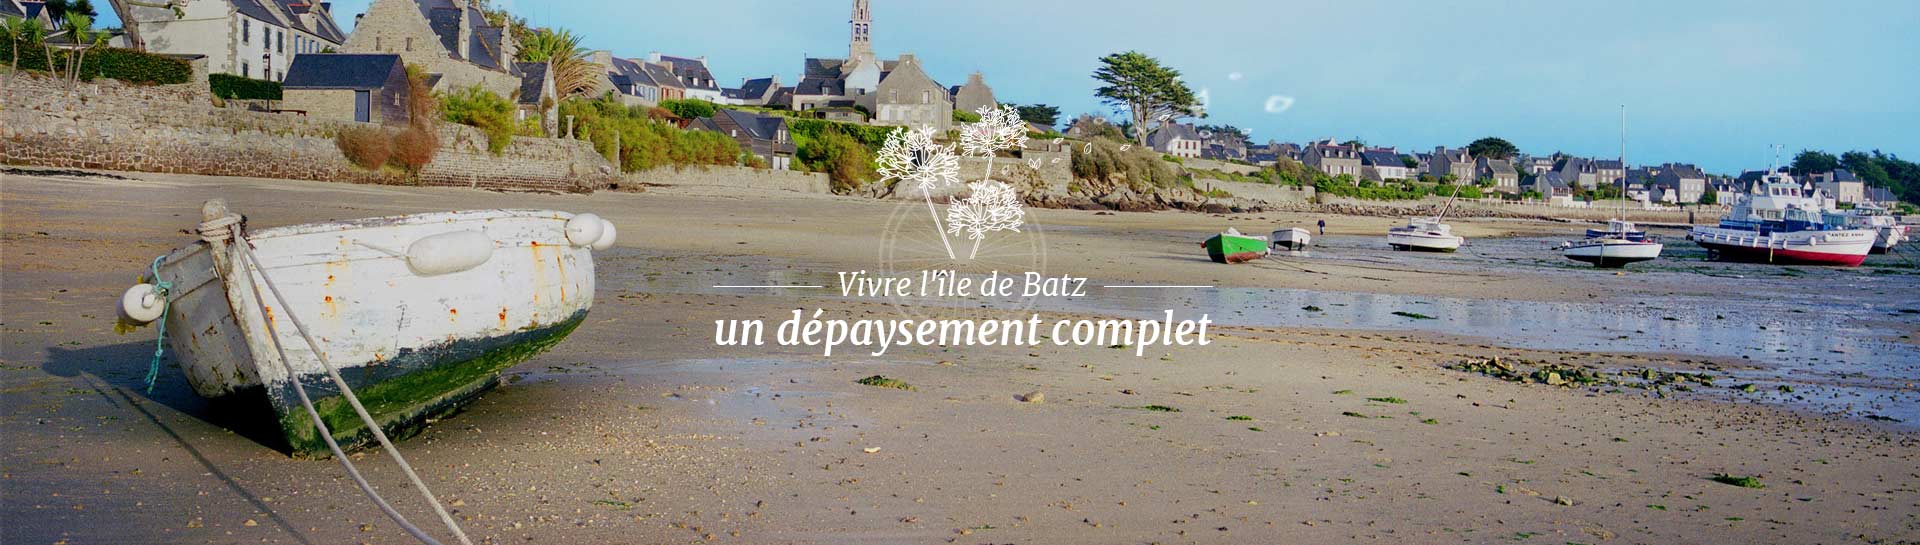 Logo Ile de Batz, île de Batz (France)